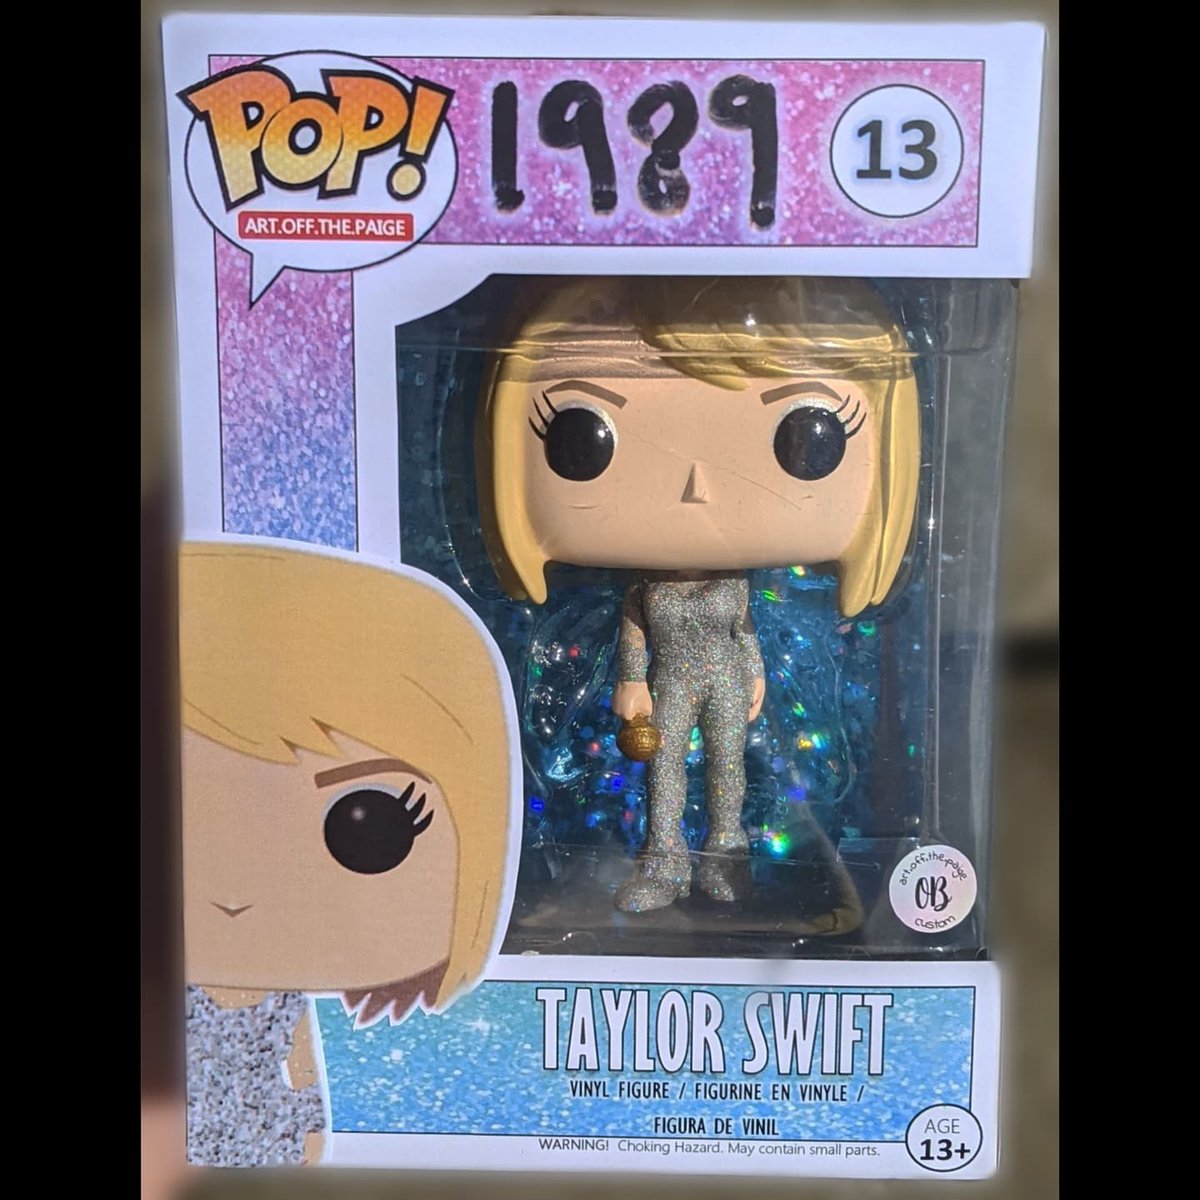 art.off.the.paige / Olivia on X: Taylor Swift 1989 Glitter Bodysuit Custom  Funko Pop! . #taylor #swift #taylorswift #swiftie #swifties #taylornation  #1989taylorsversion #wildestdreams #newyork #ny #glitter #sparkle  #artistontwittter #customfunkopop